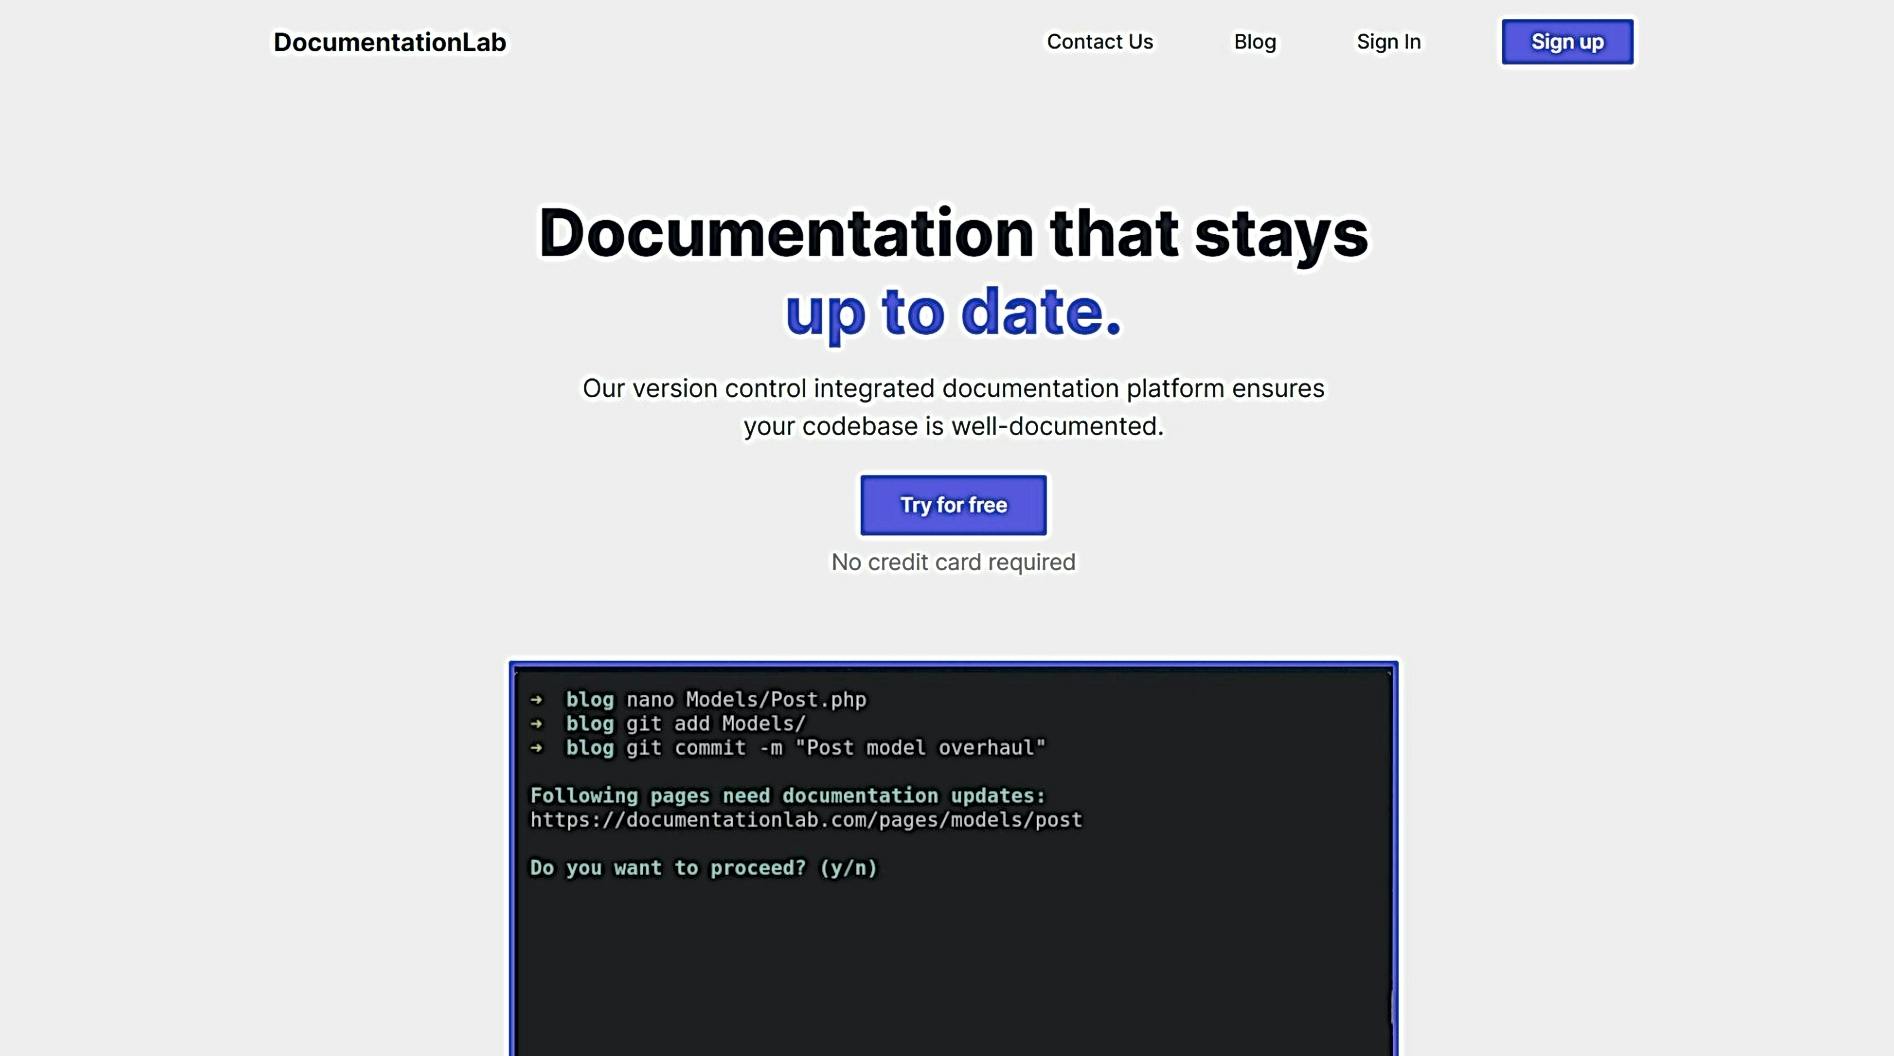 DocumentationLab featured